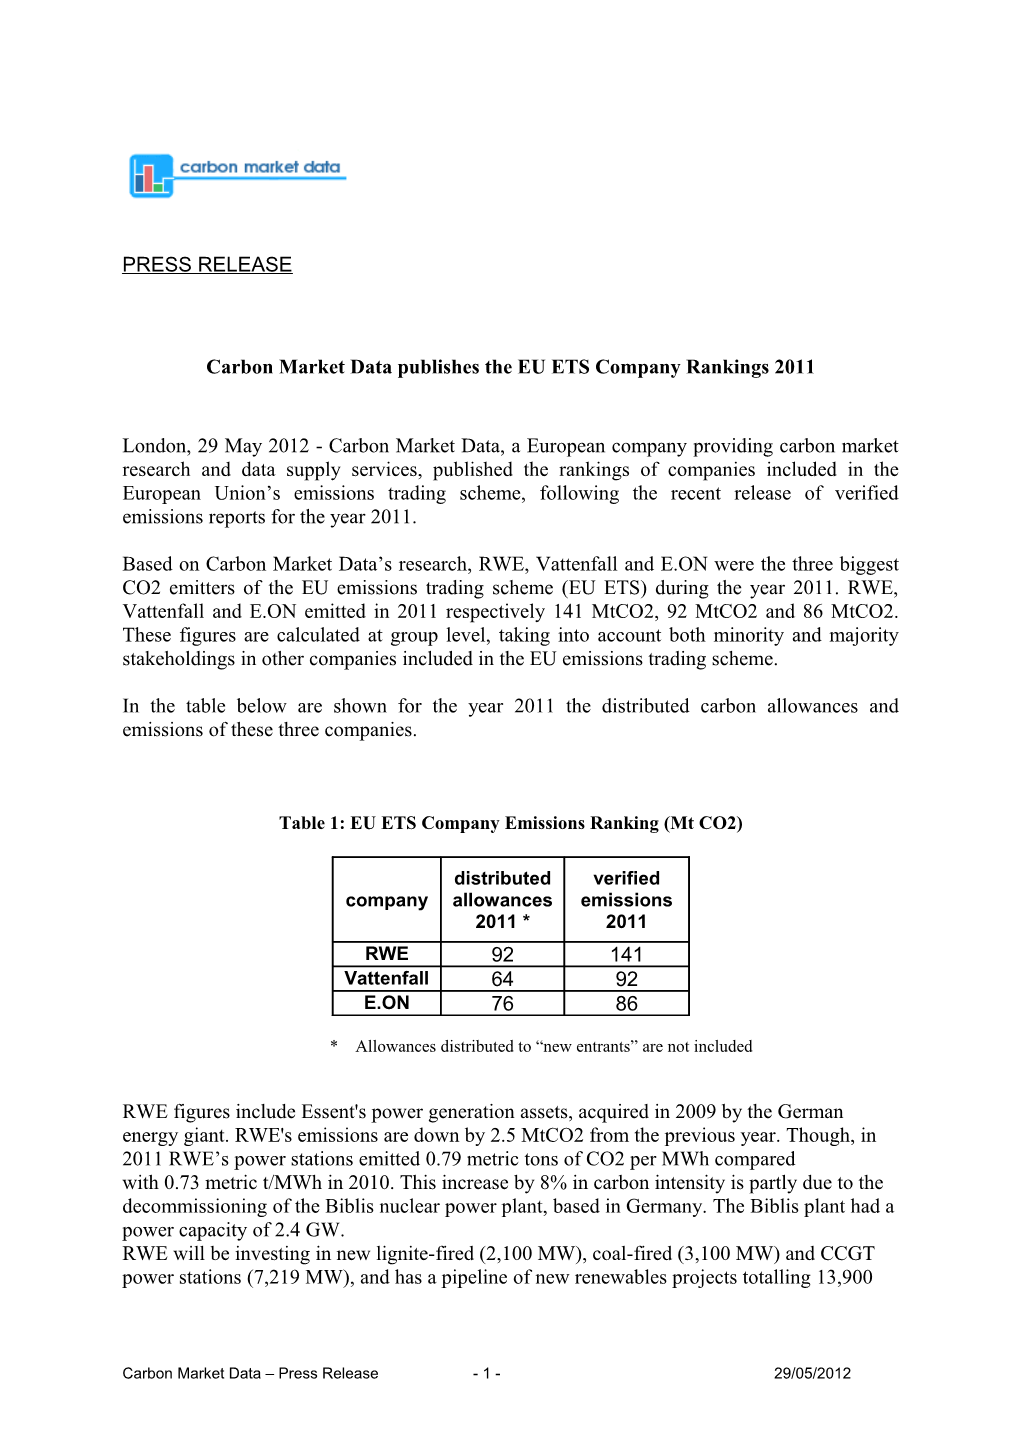 EU ETS Company Rankings 2008